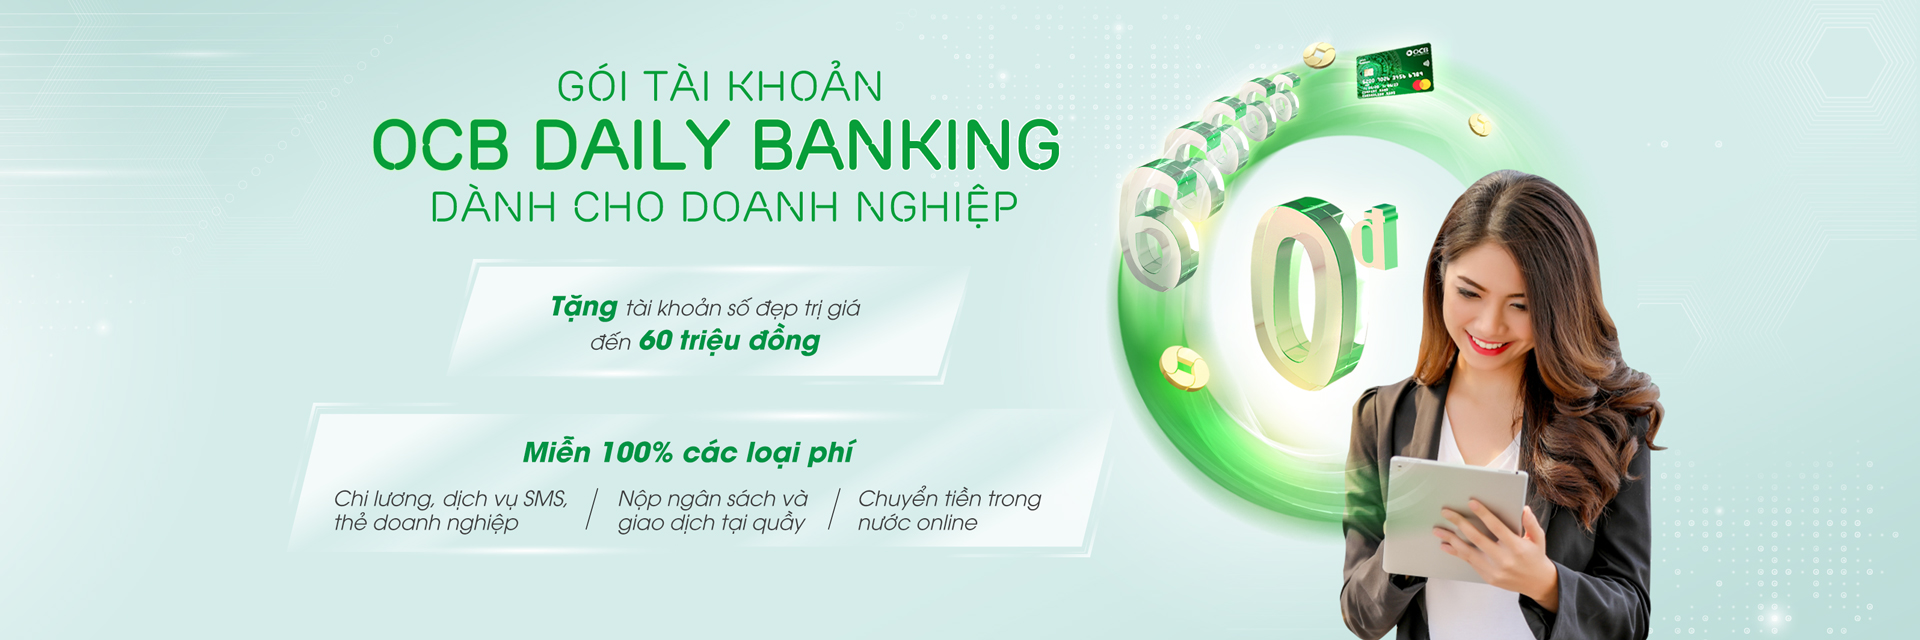 OCB Daily Banking Account